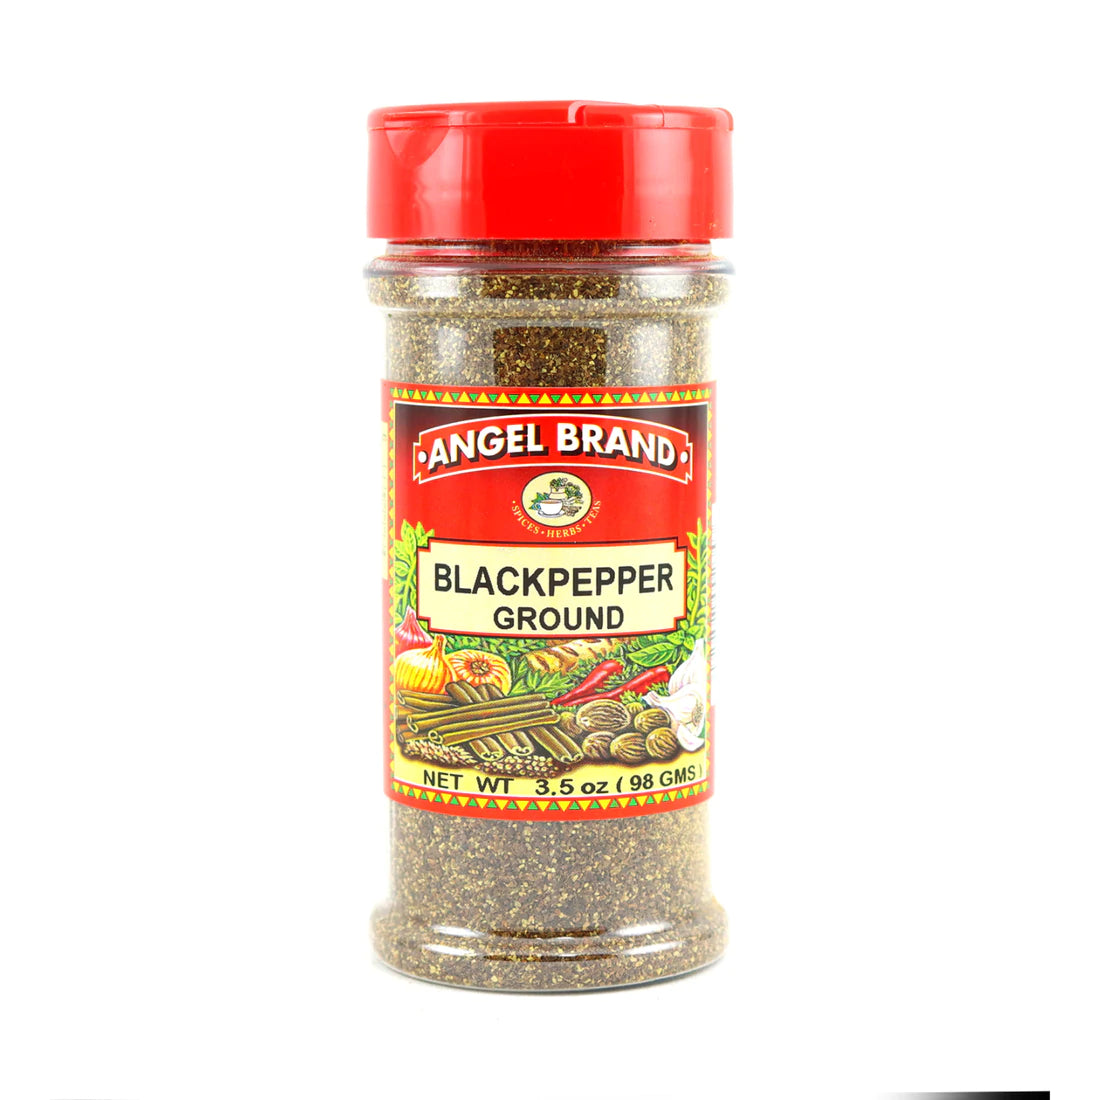 Ground Black Pepper - High Plains Spice Company